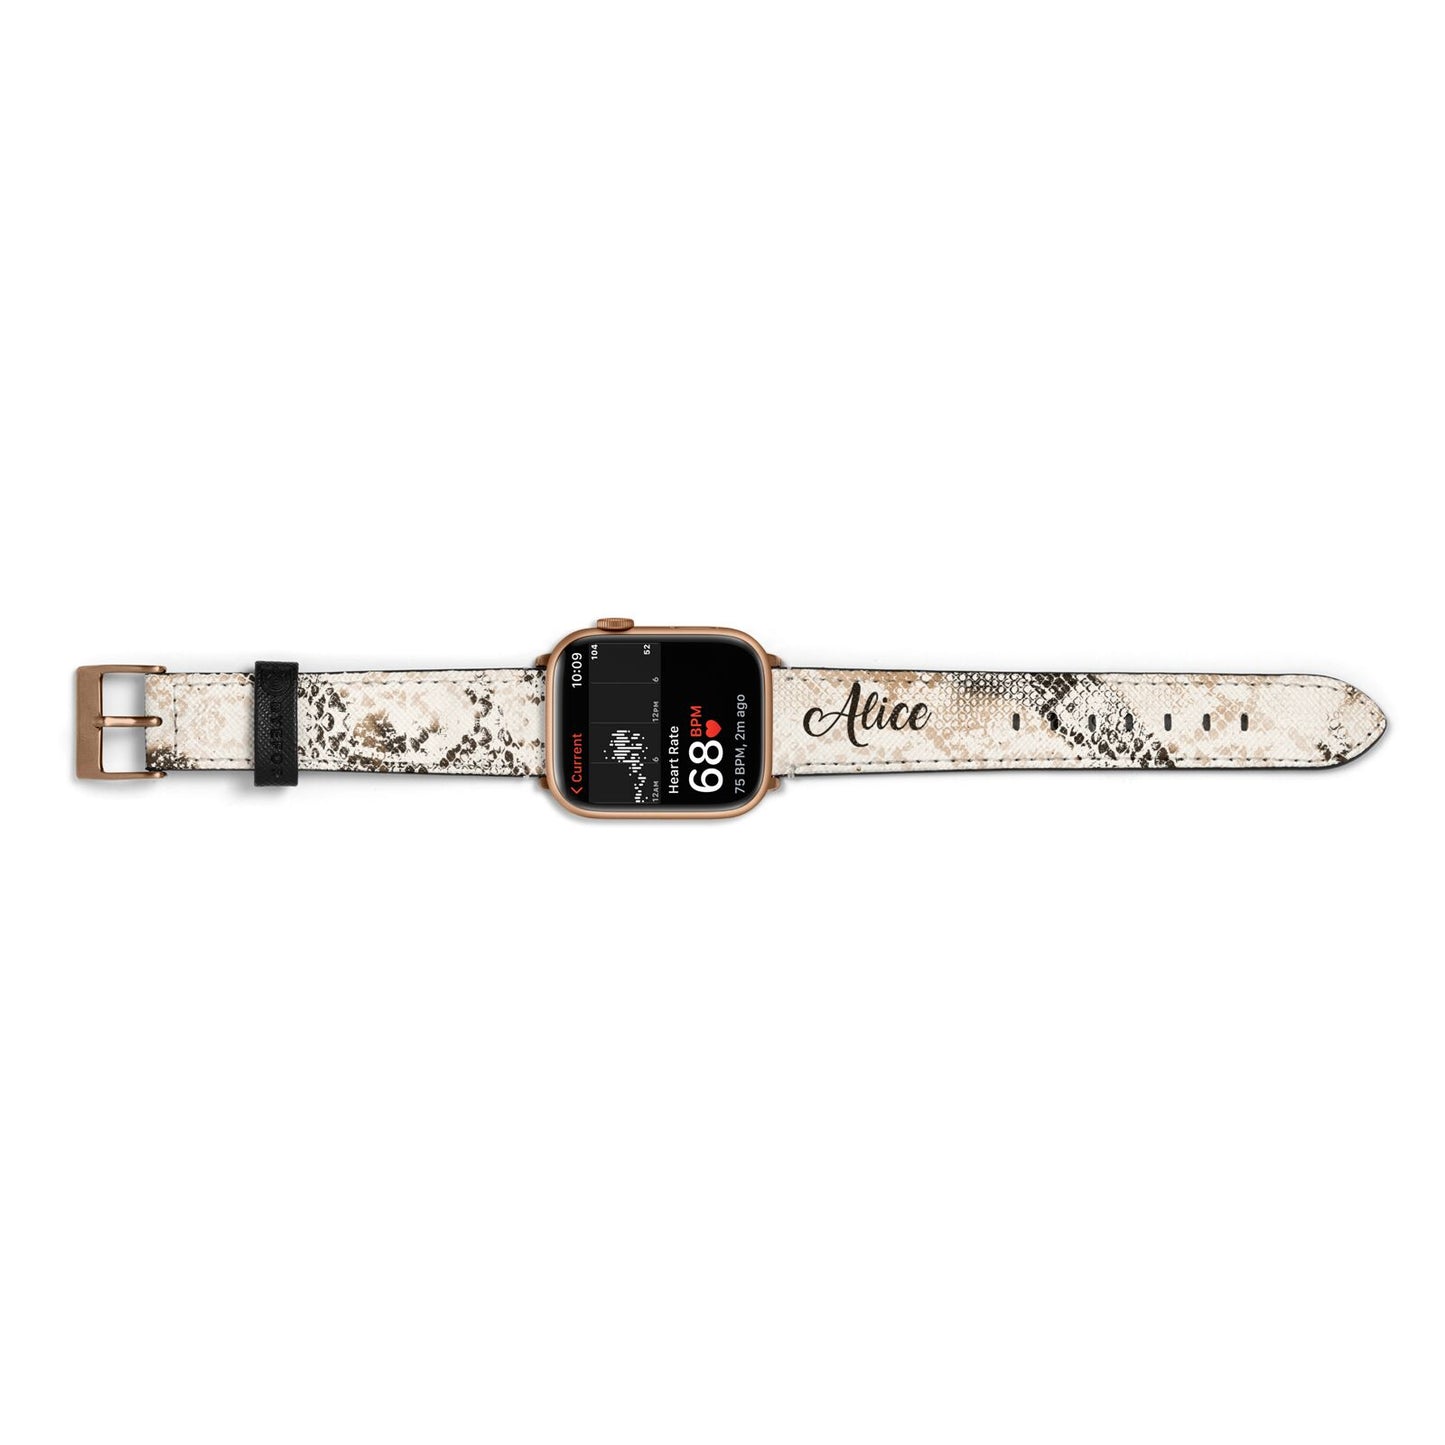 Custom Snakeskin Apple Watch Strap Size 38mm Landscape Image Gold Hardware